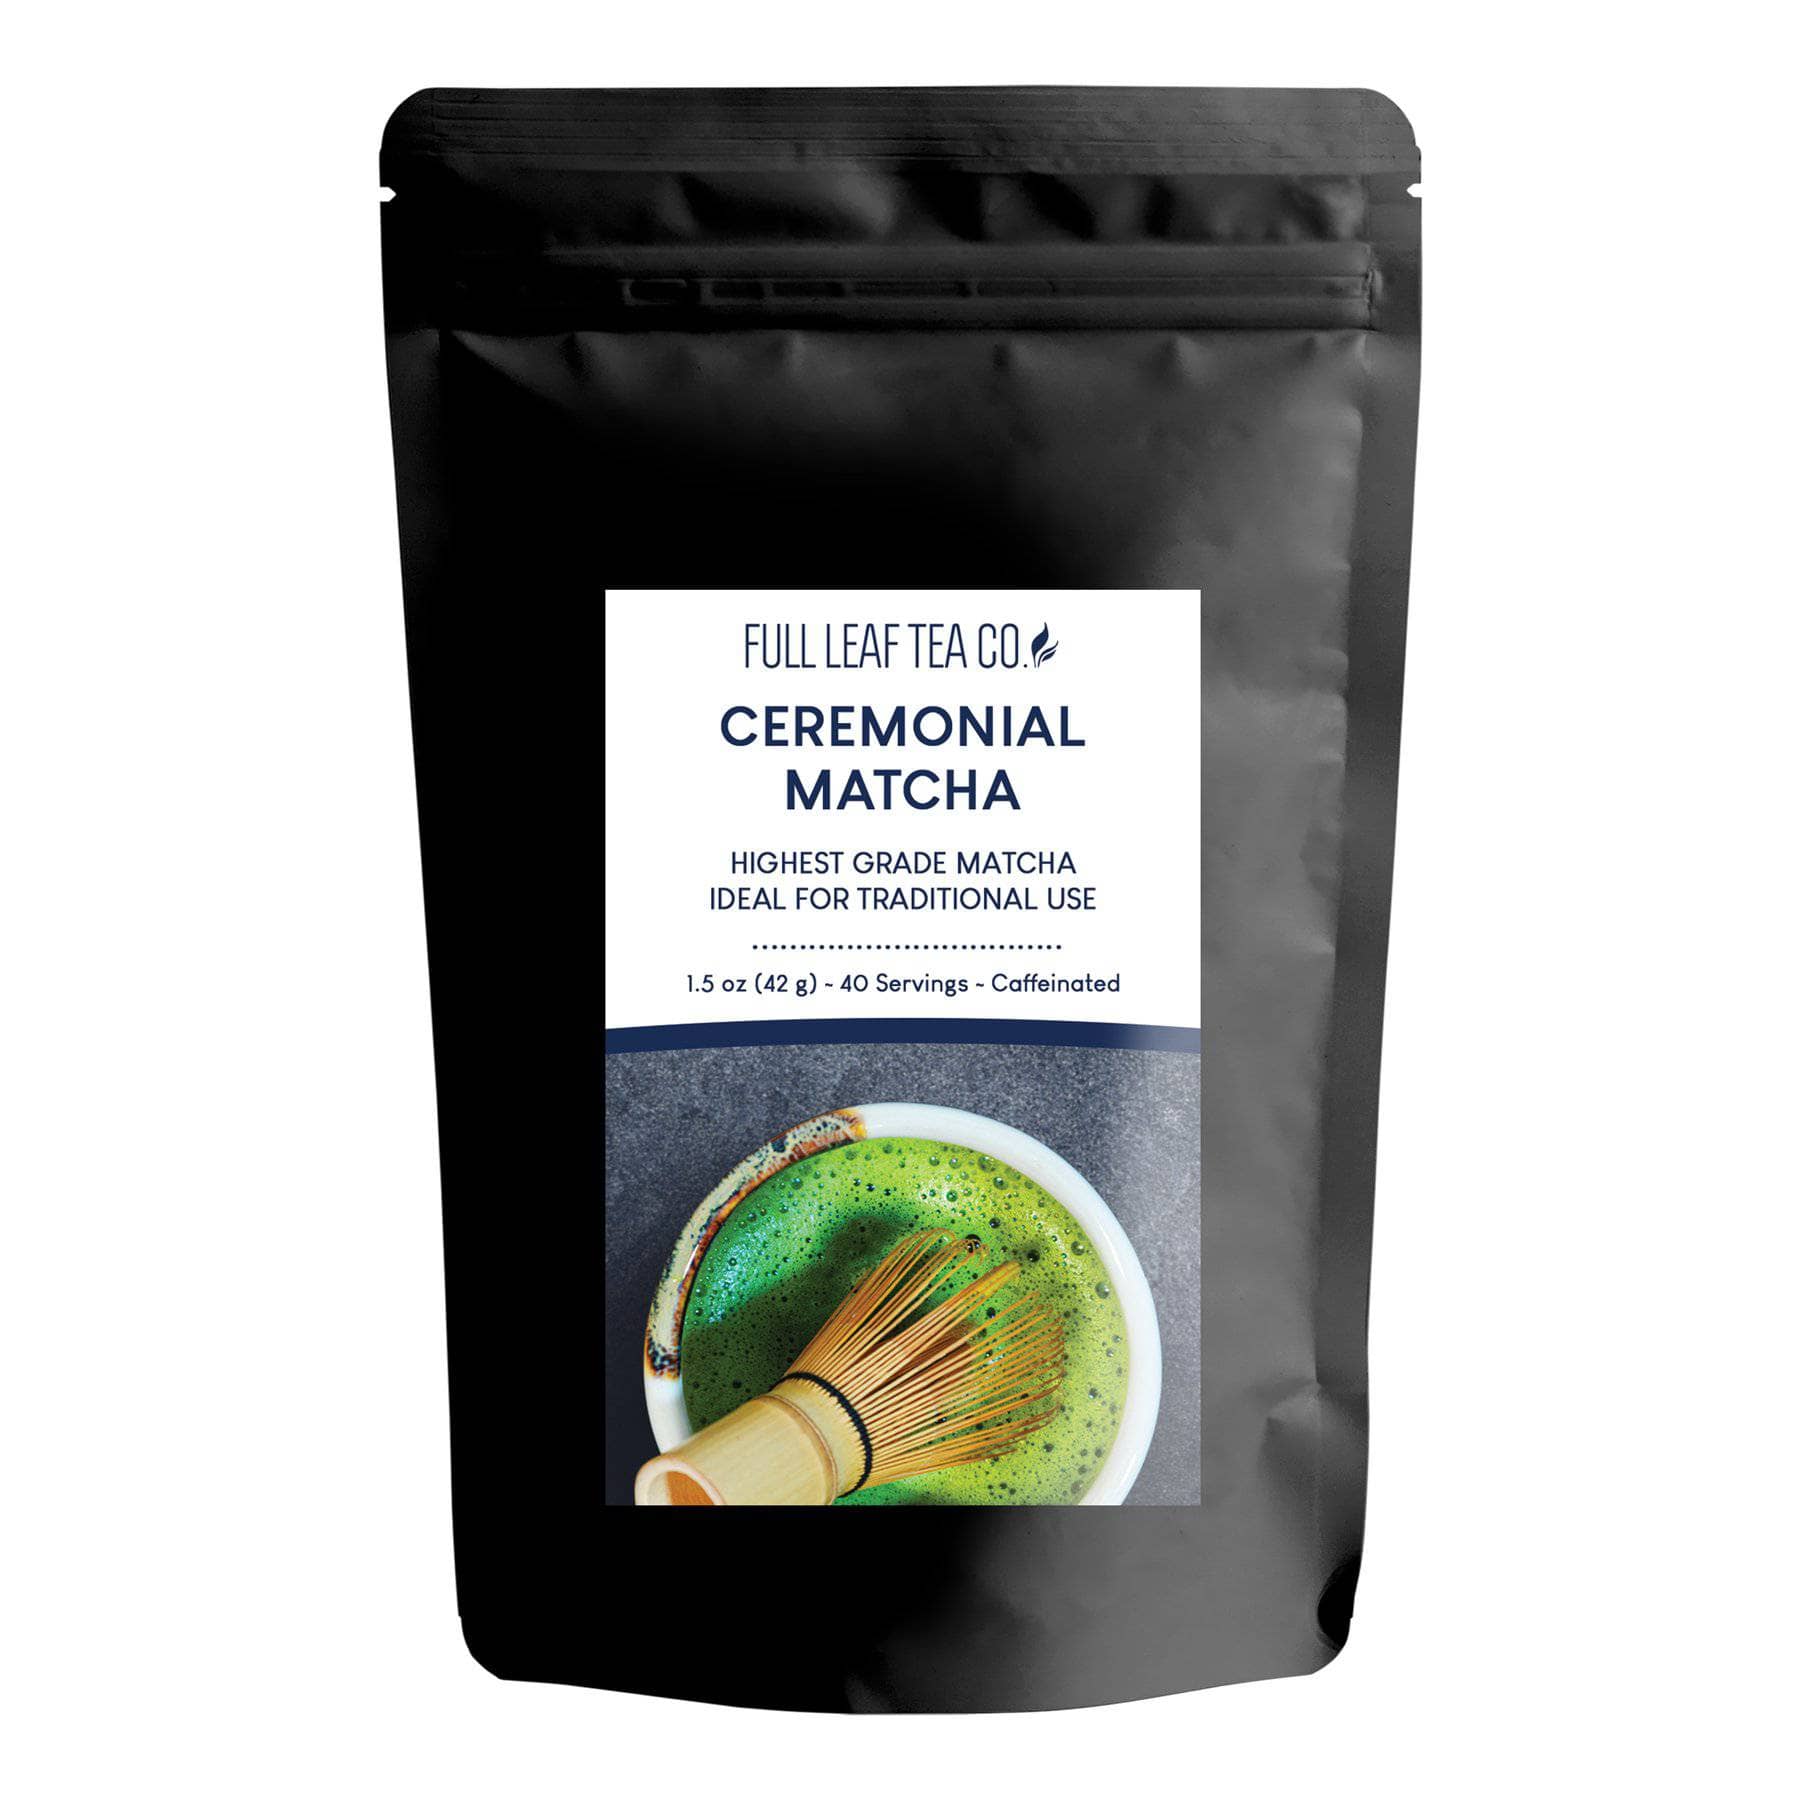 Ceremonial Matcha Green Tea Powder - Organic